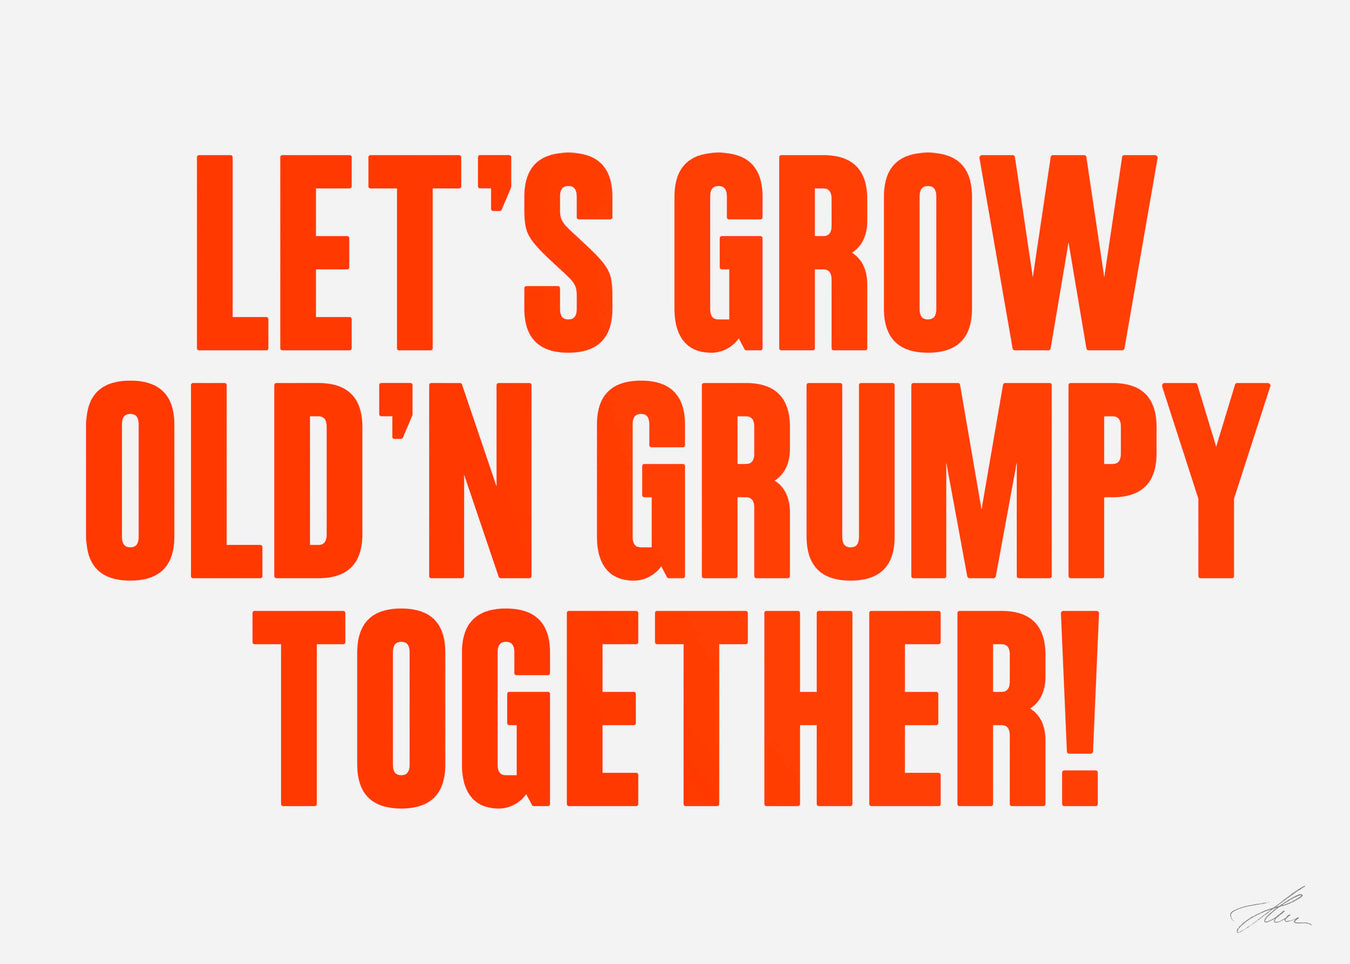 Let's grow old'n grumpy together!